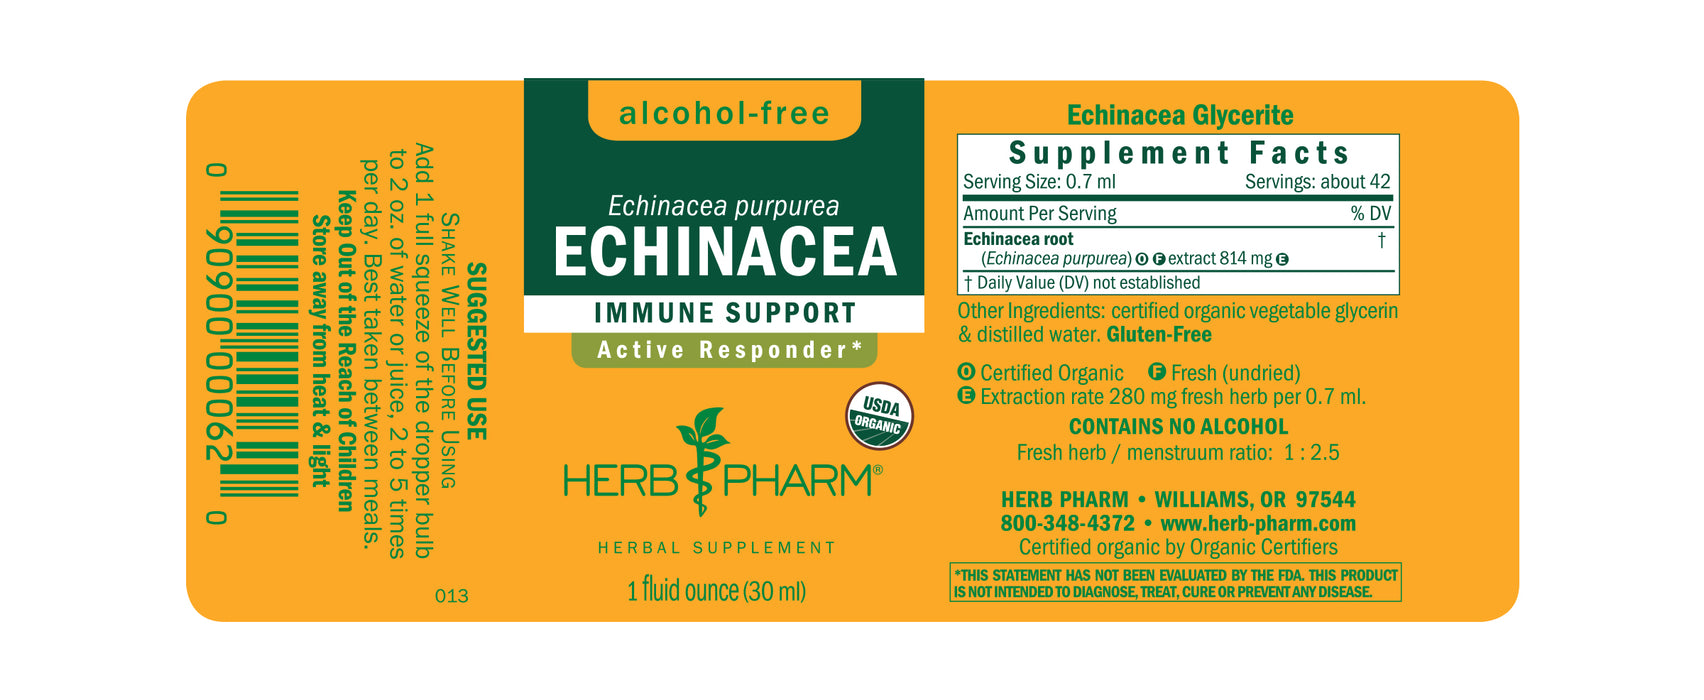 Echinacea, Alcohol-Free